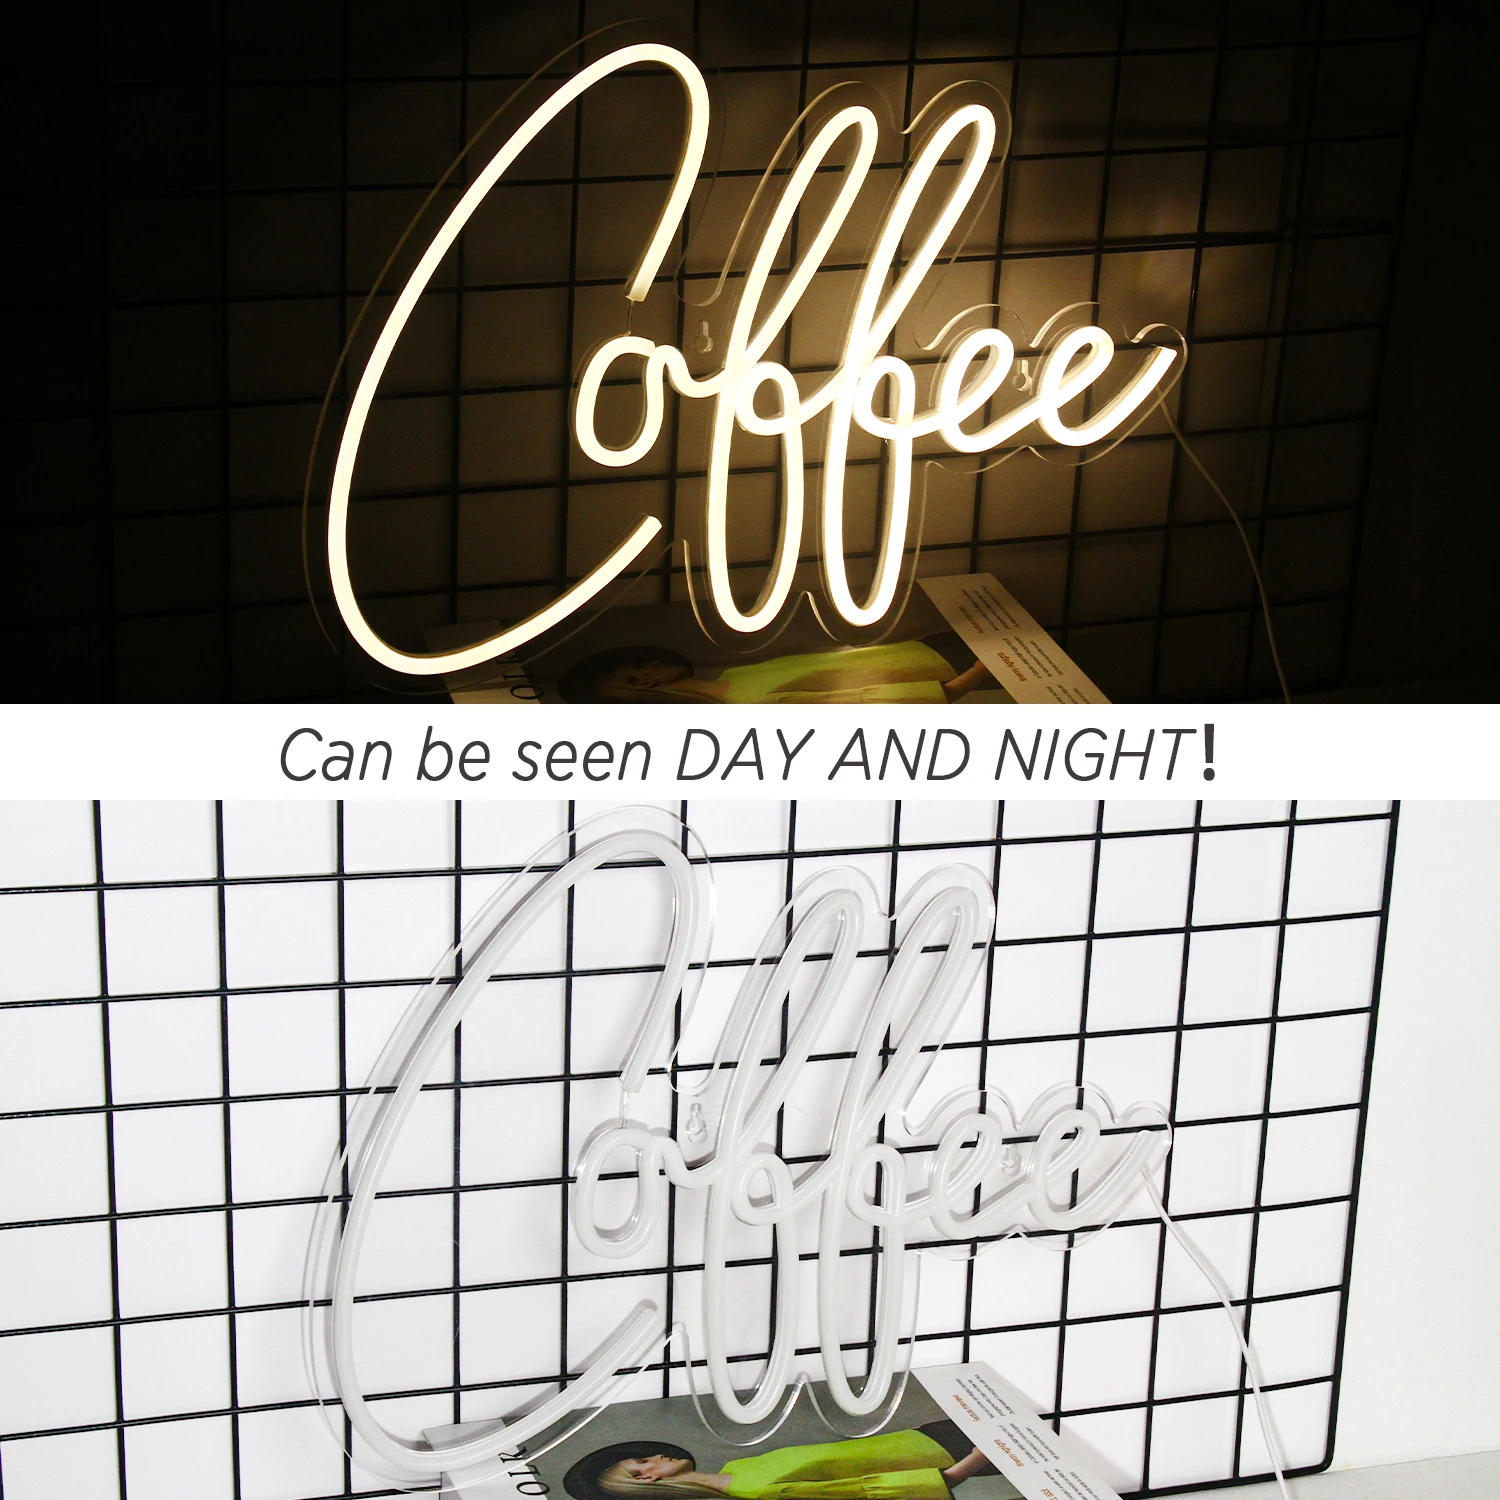 Coffce Neon Sich Led Lights Wandlamp Decor Voor Home Bar Party Festa Cafe Logo Letter Welcome Up Light Up Zucht Usb Room Decoratie